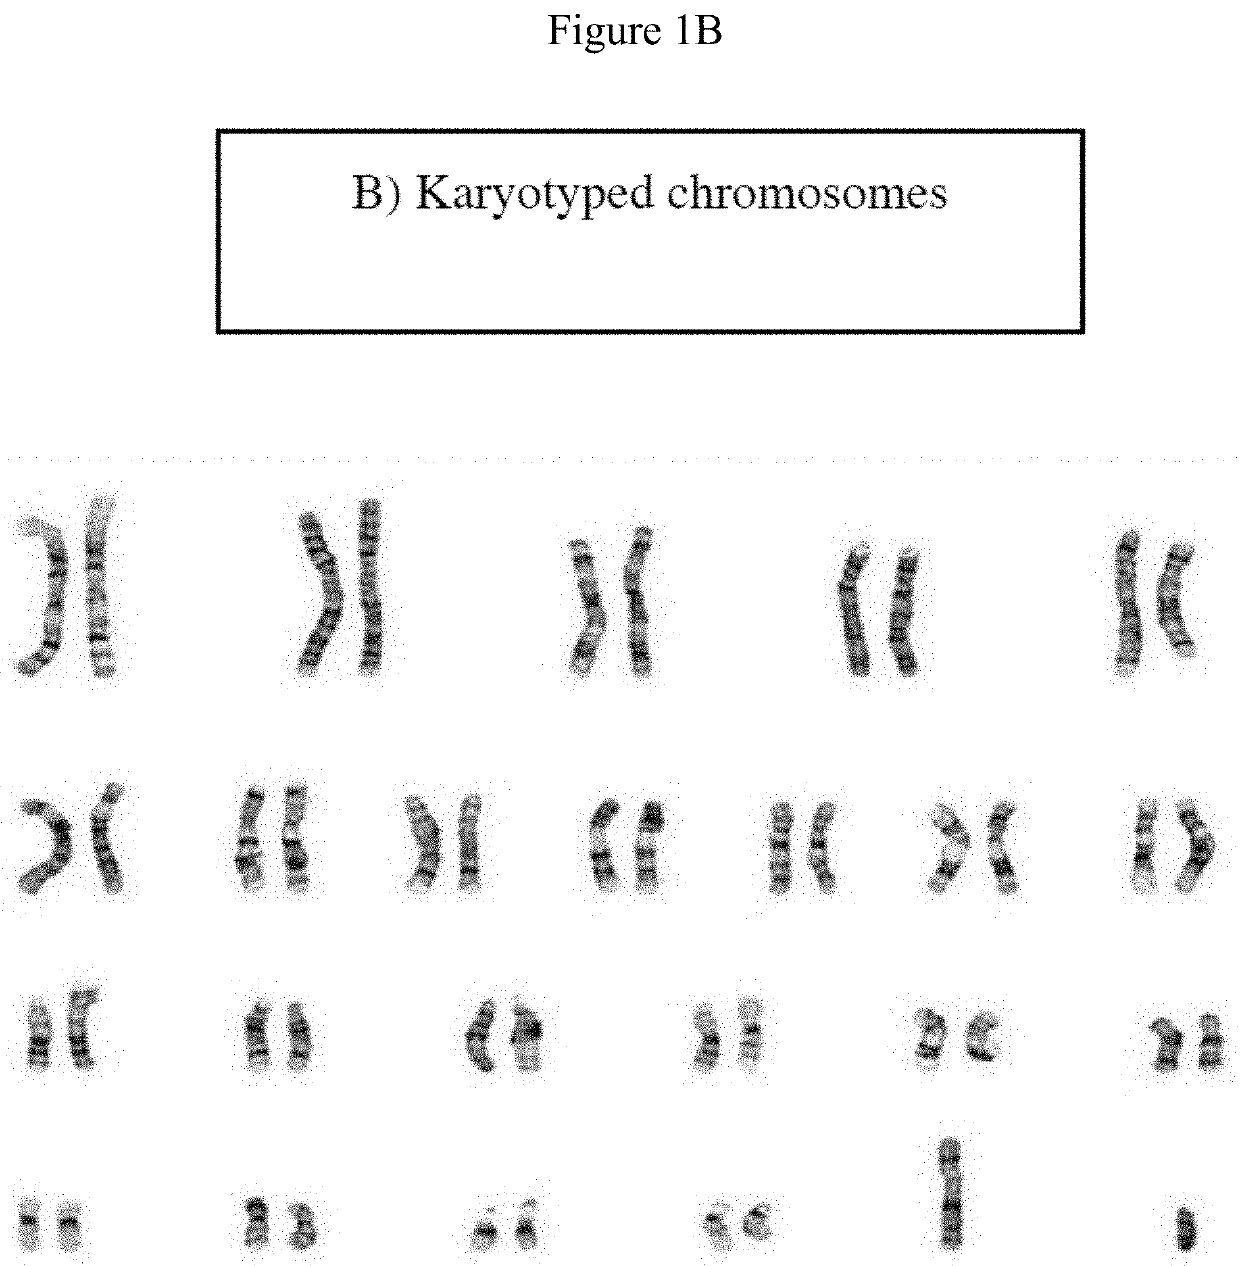 Chromosomal enhancement and automatic detection of chromosomal abnormalities using chromosomal ideograms